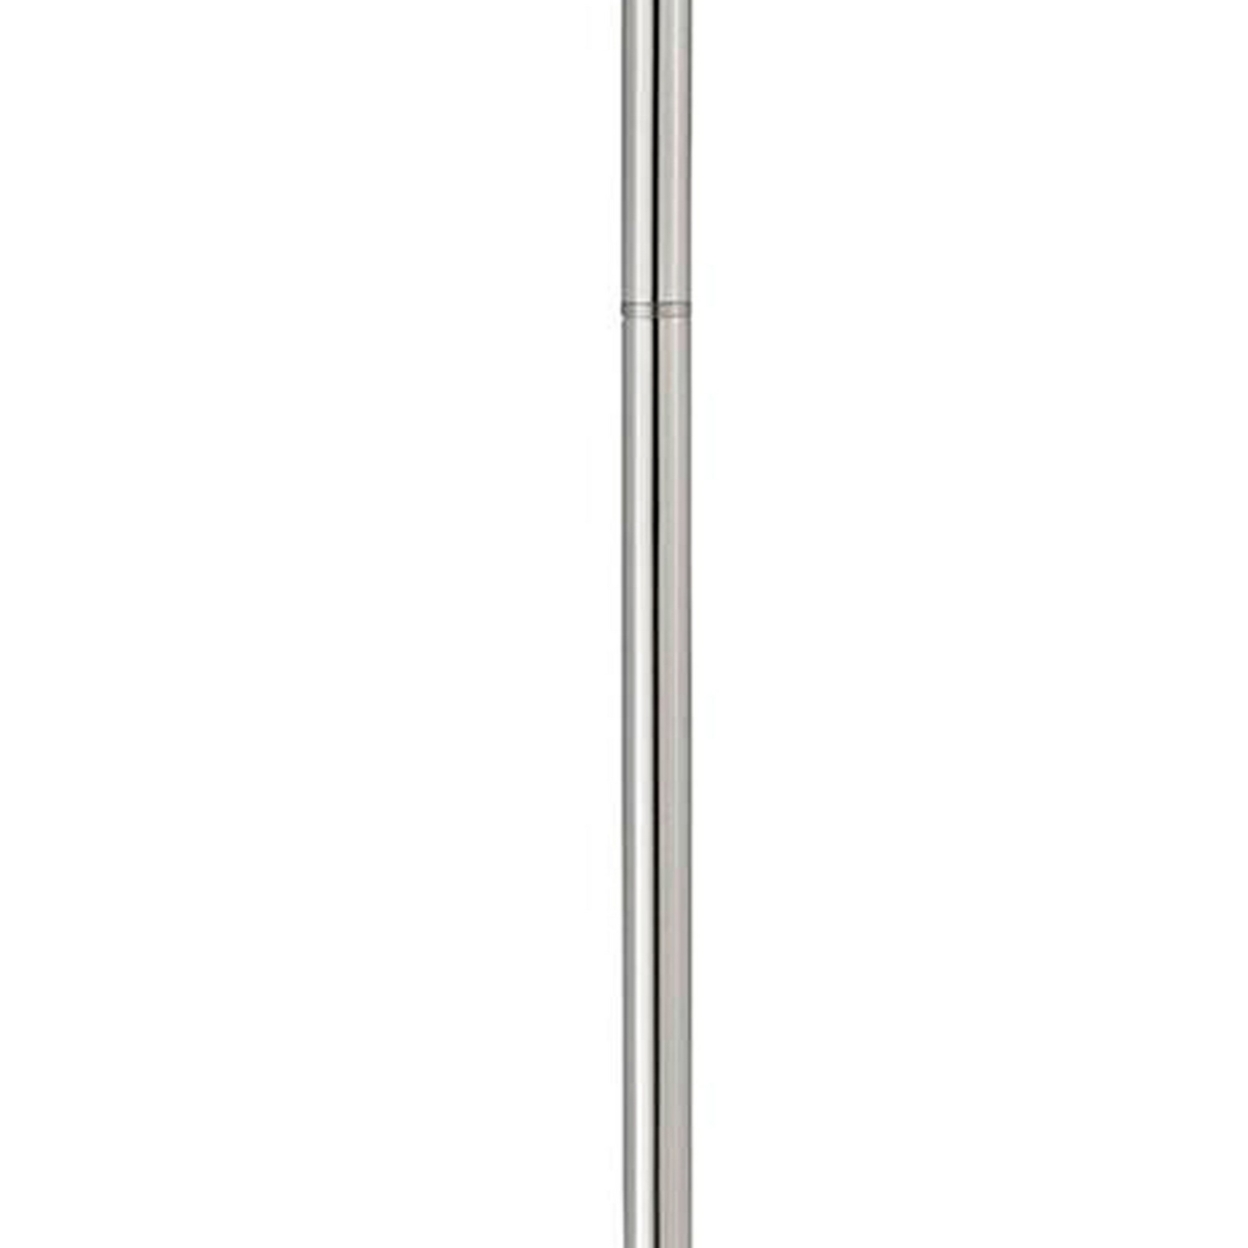 Metal Round 3 Way Floor Lamp With Spider Type Shade, Silver- Saltoro Sherpi